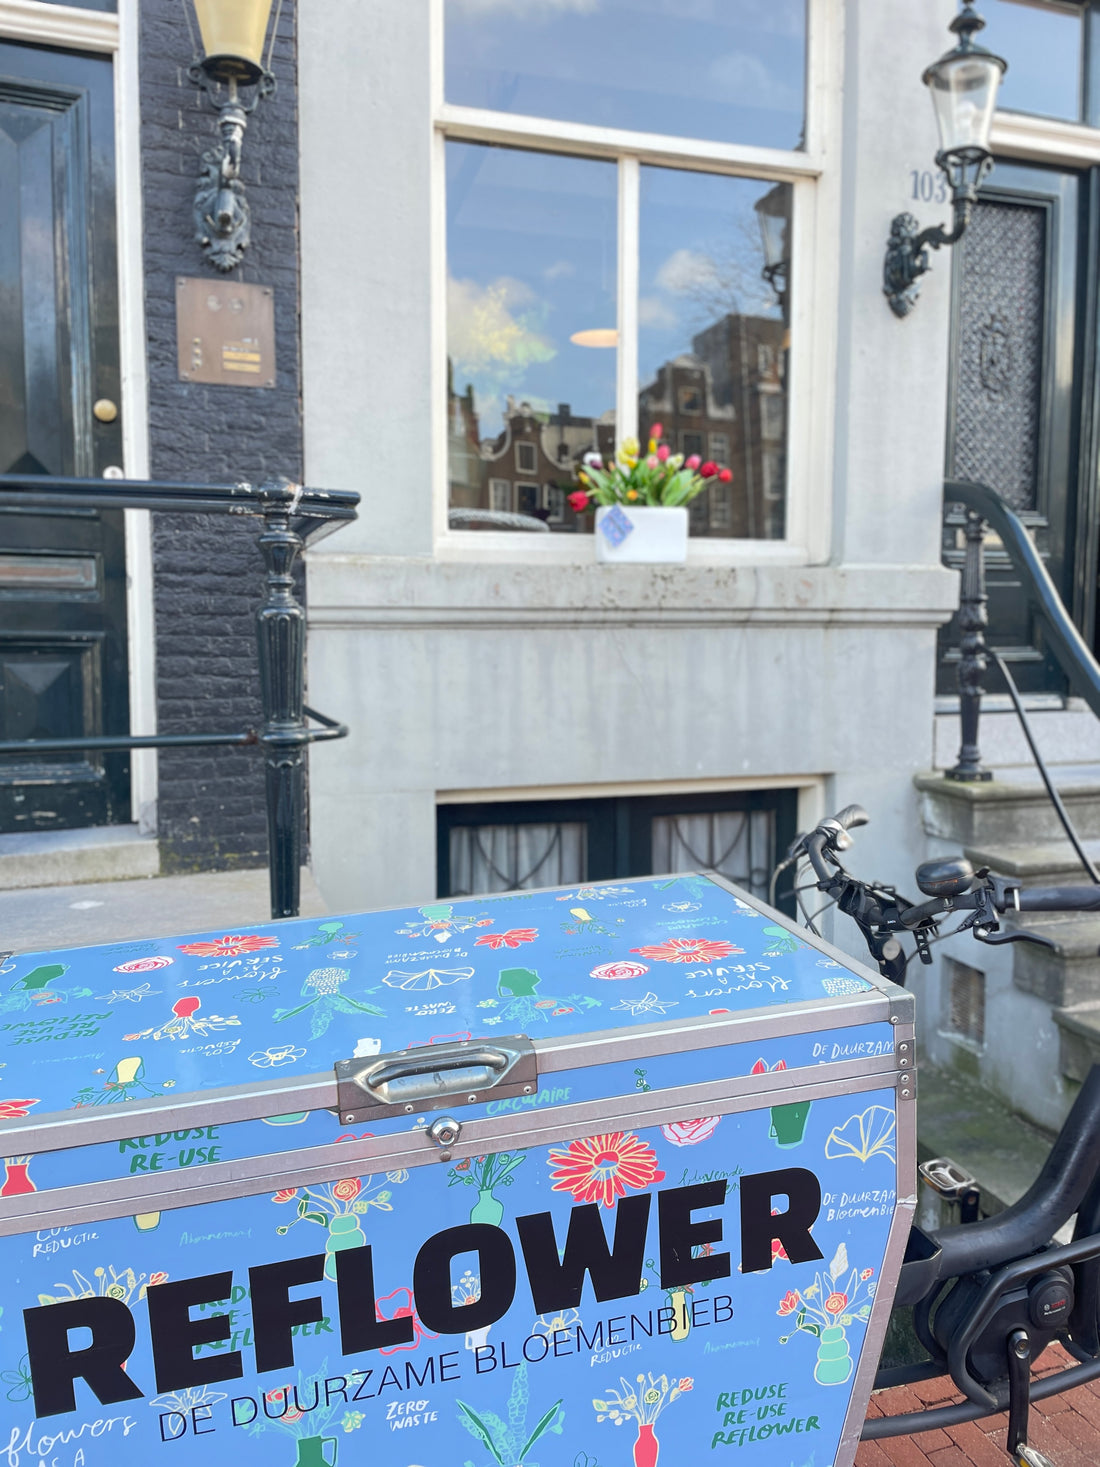 De Straten van Amsterdam - AT5 - Herengracht x Reflower